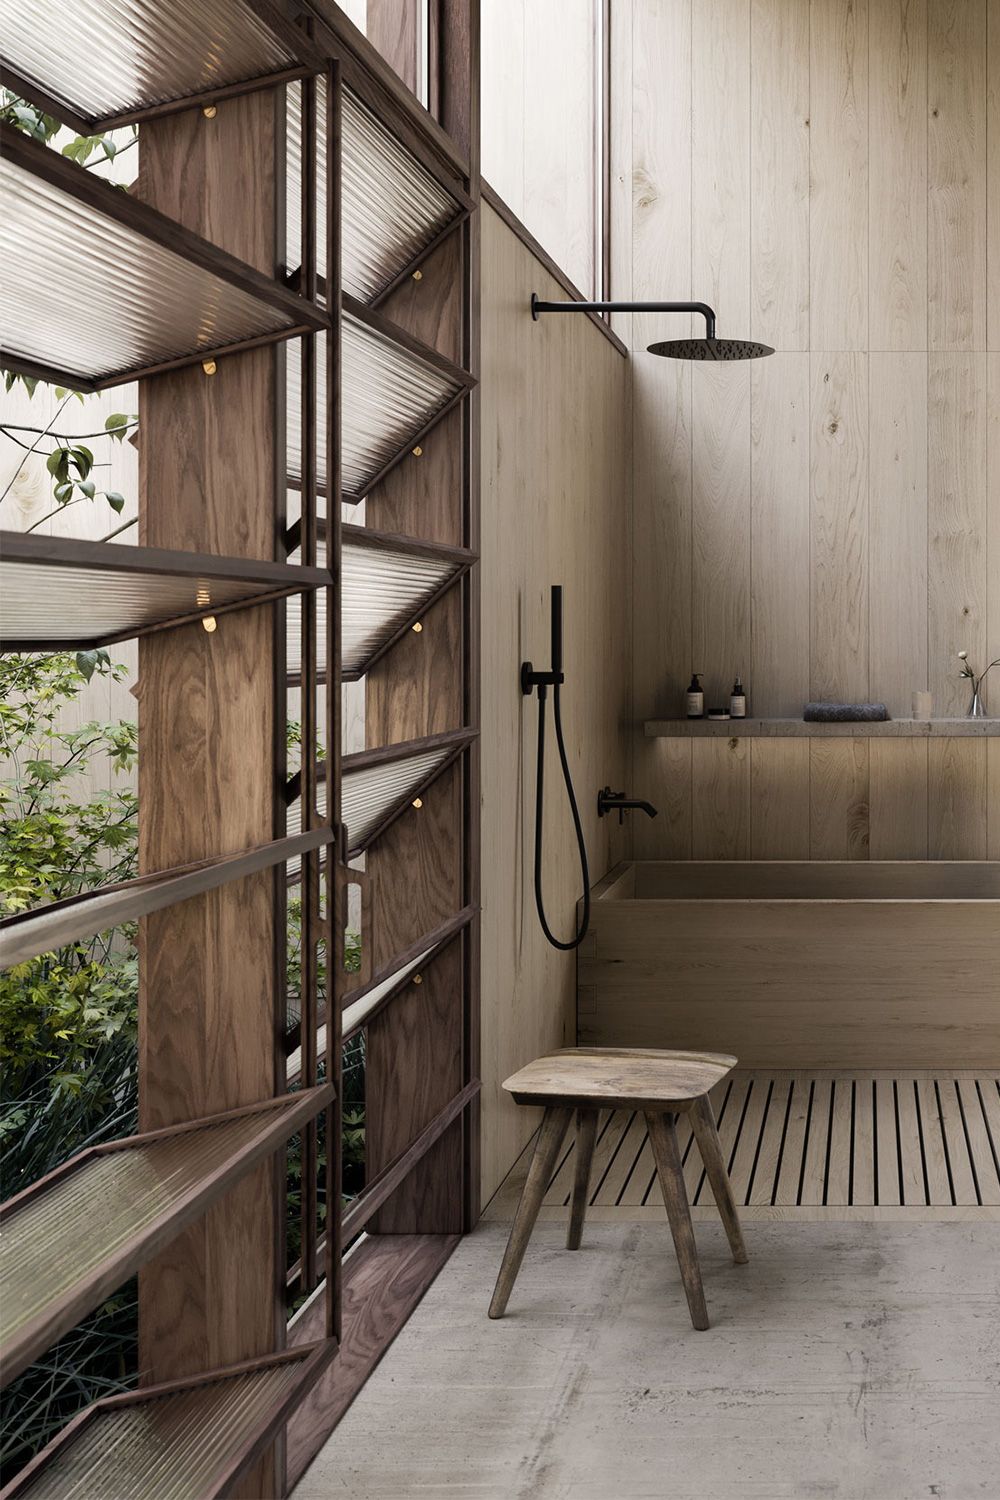 Proyecto de arquitectura casa detalle baño en madera